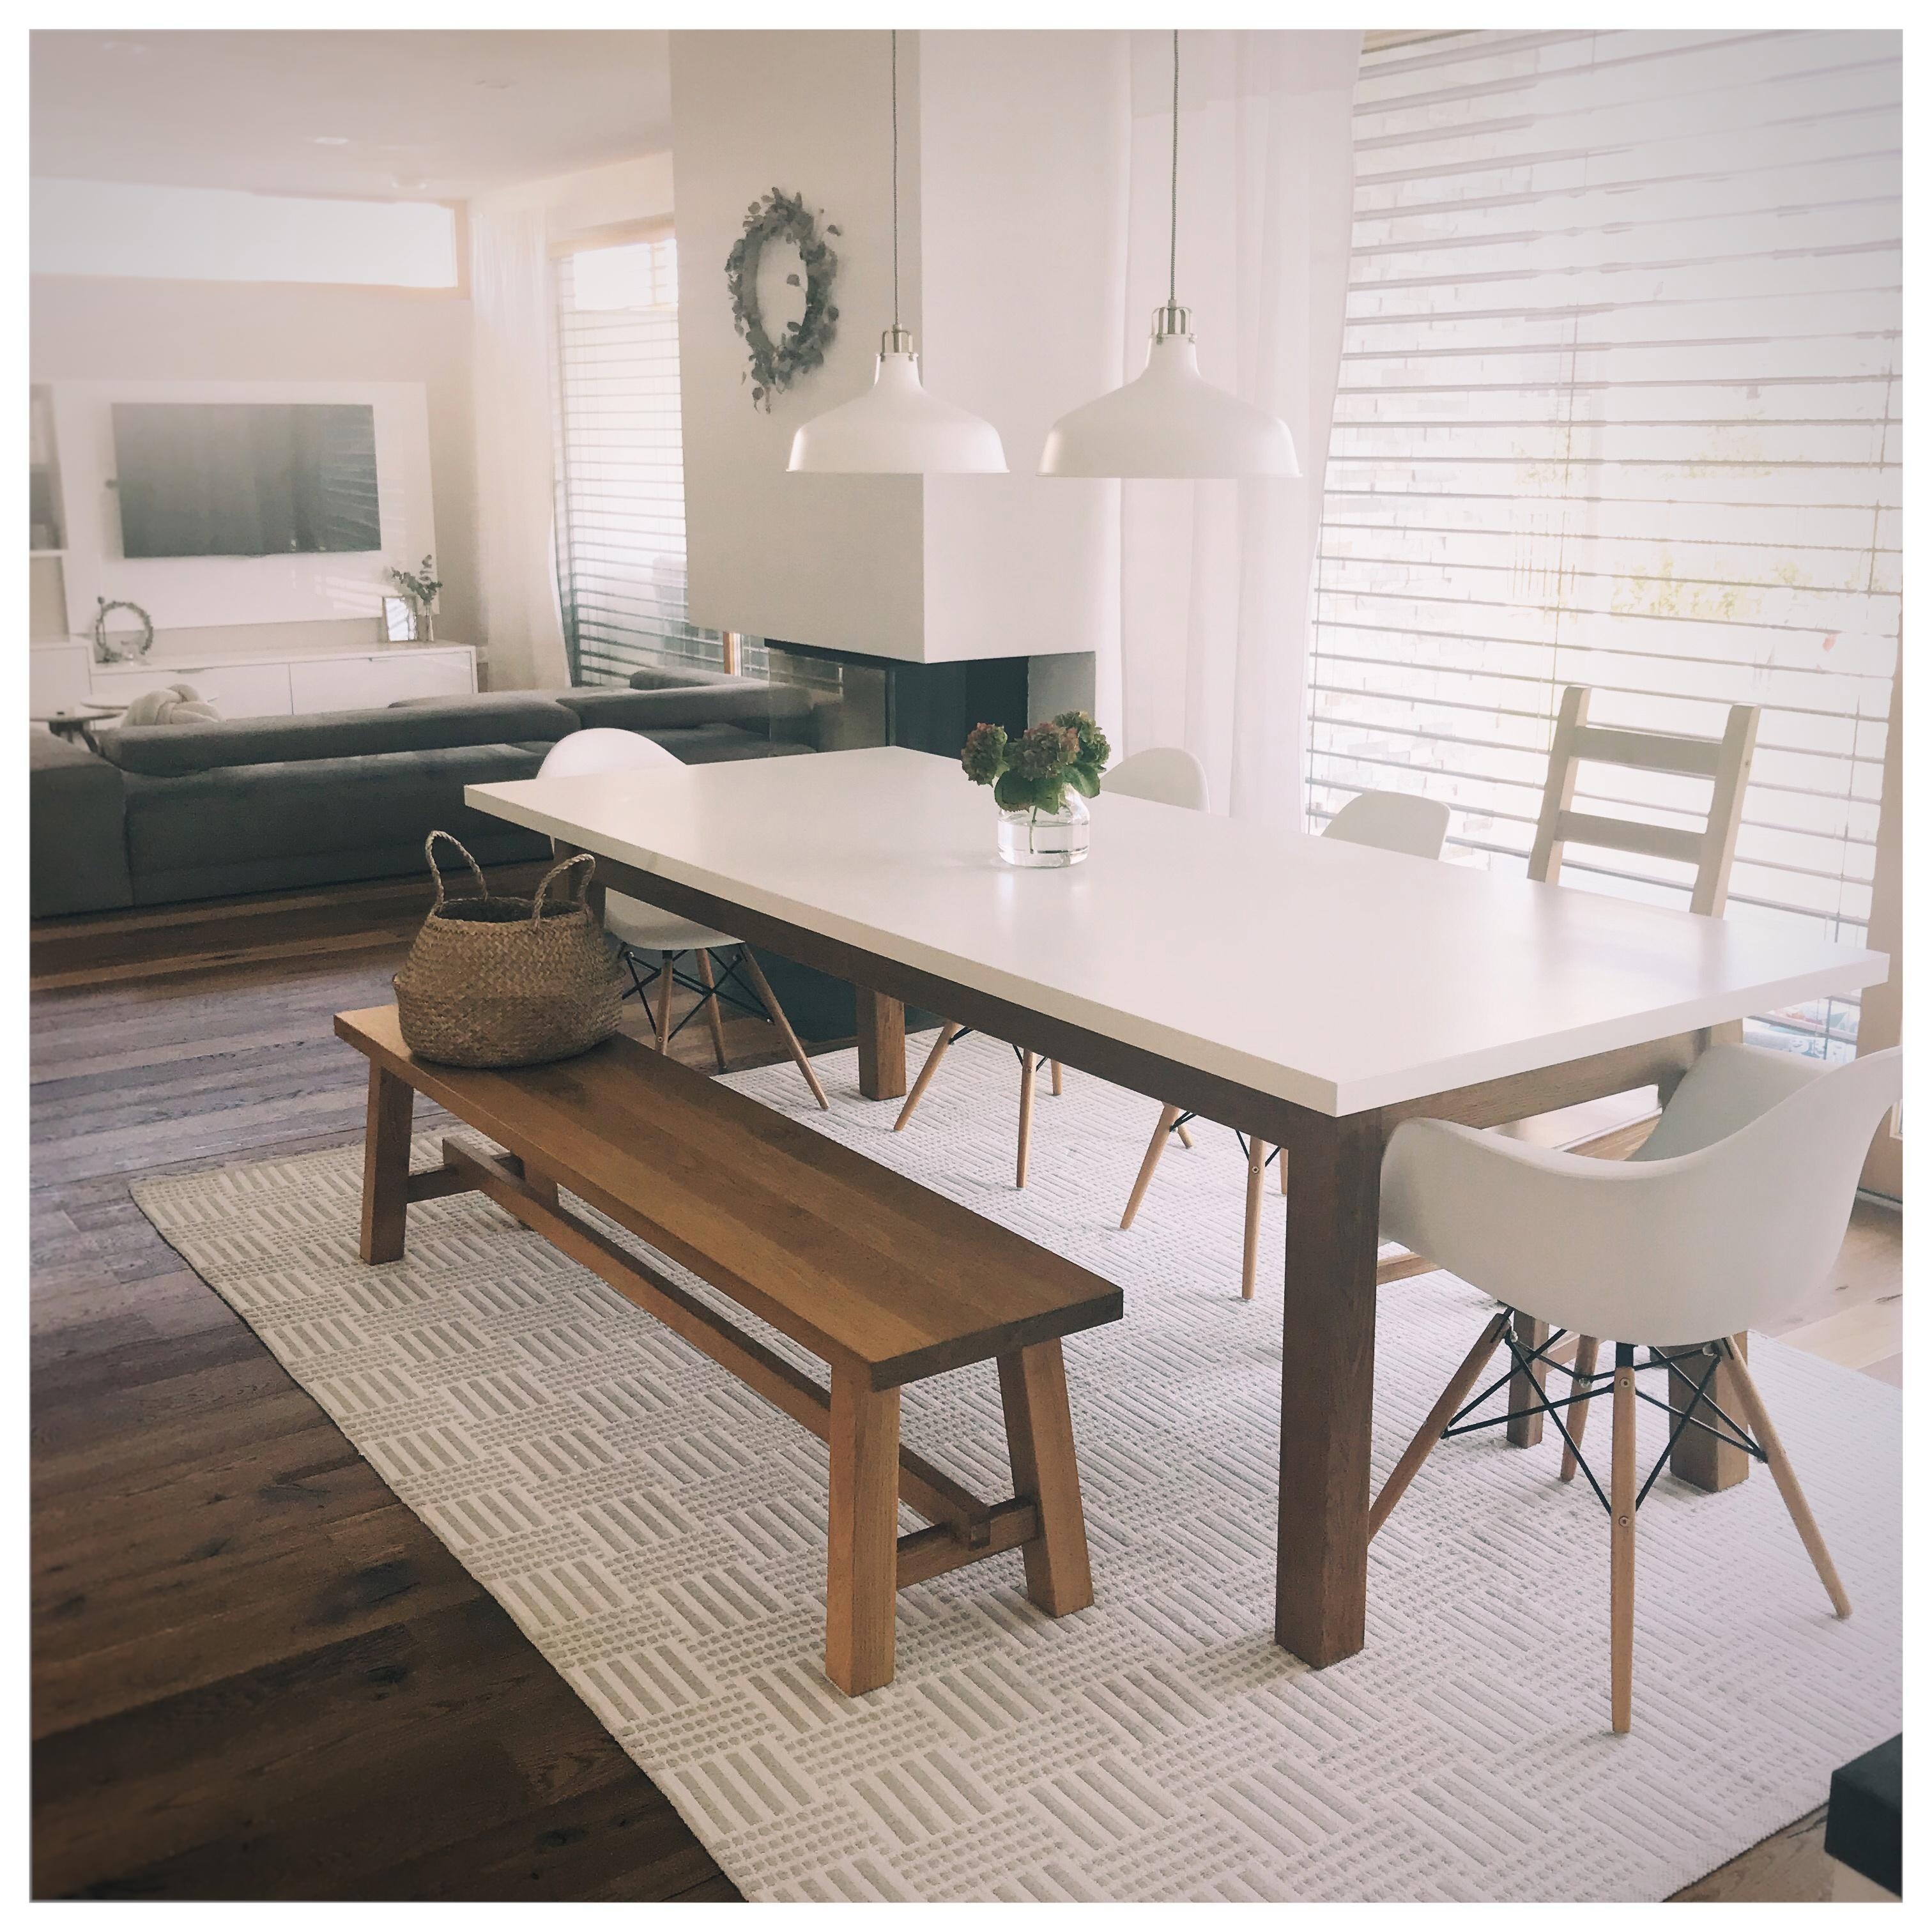 Unser Lieblingsplatz im ganzen Haus ❤️
#familyhome #whiteliving #wood #lieblingsplatz #table #dinningroom #esszimmer